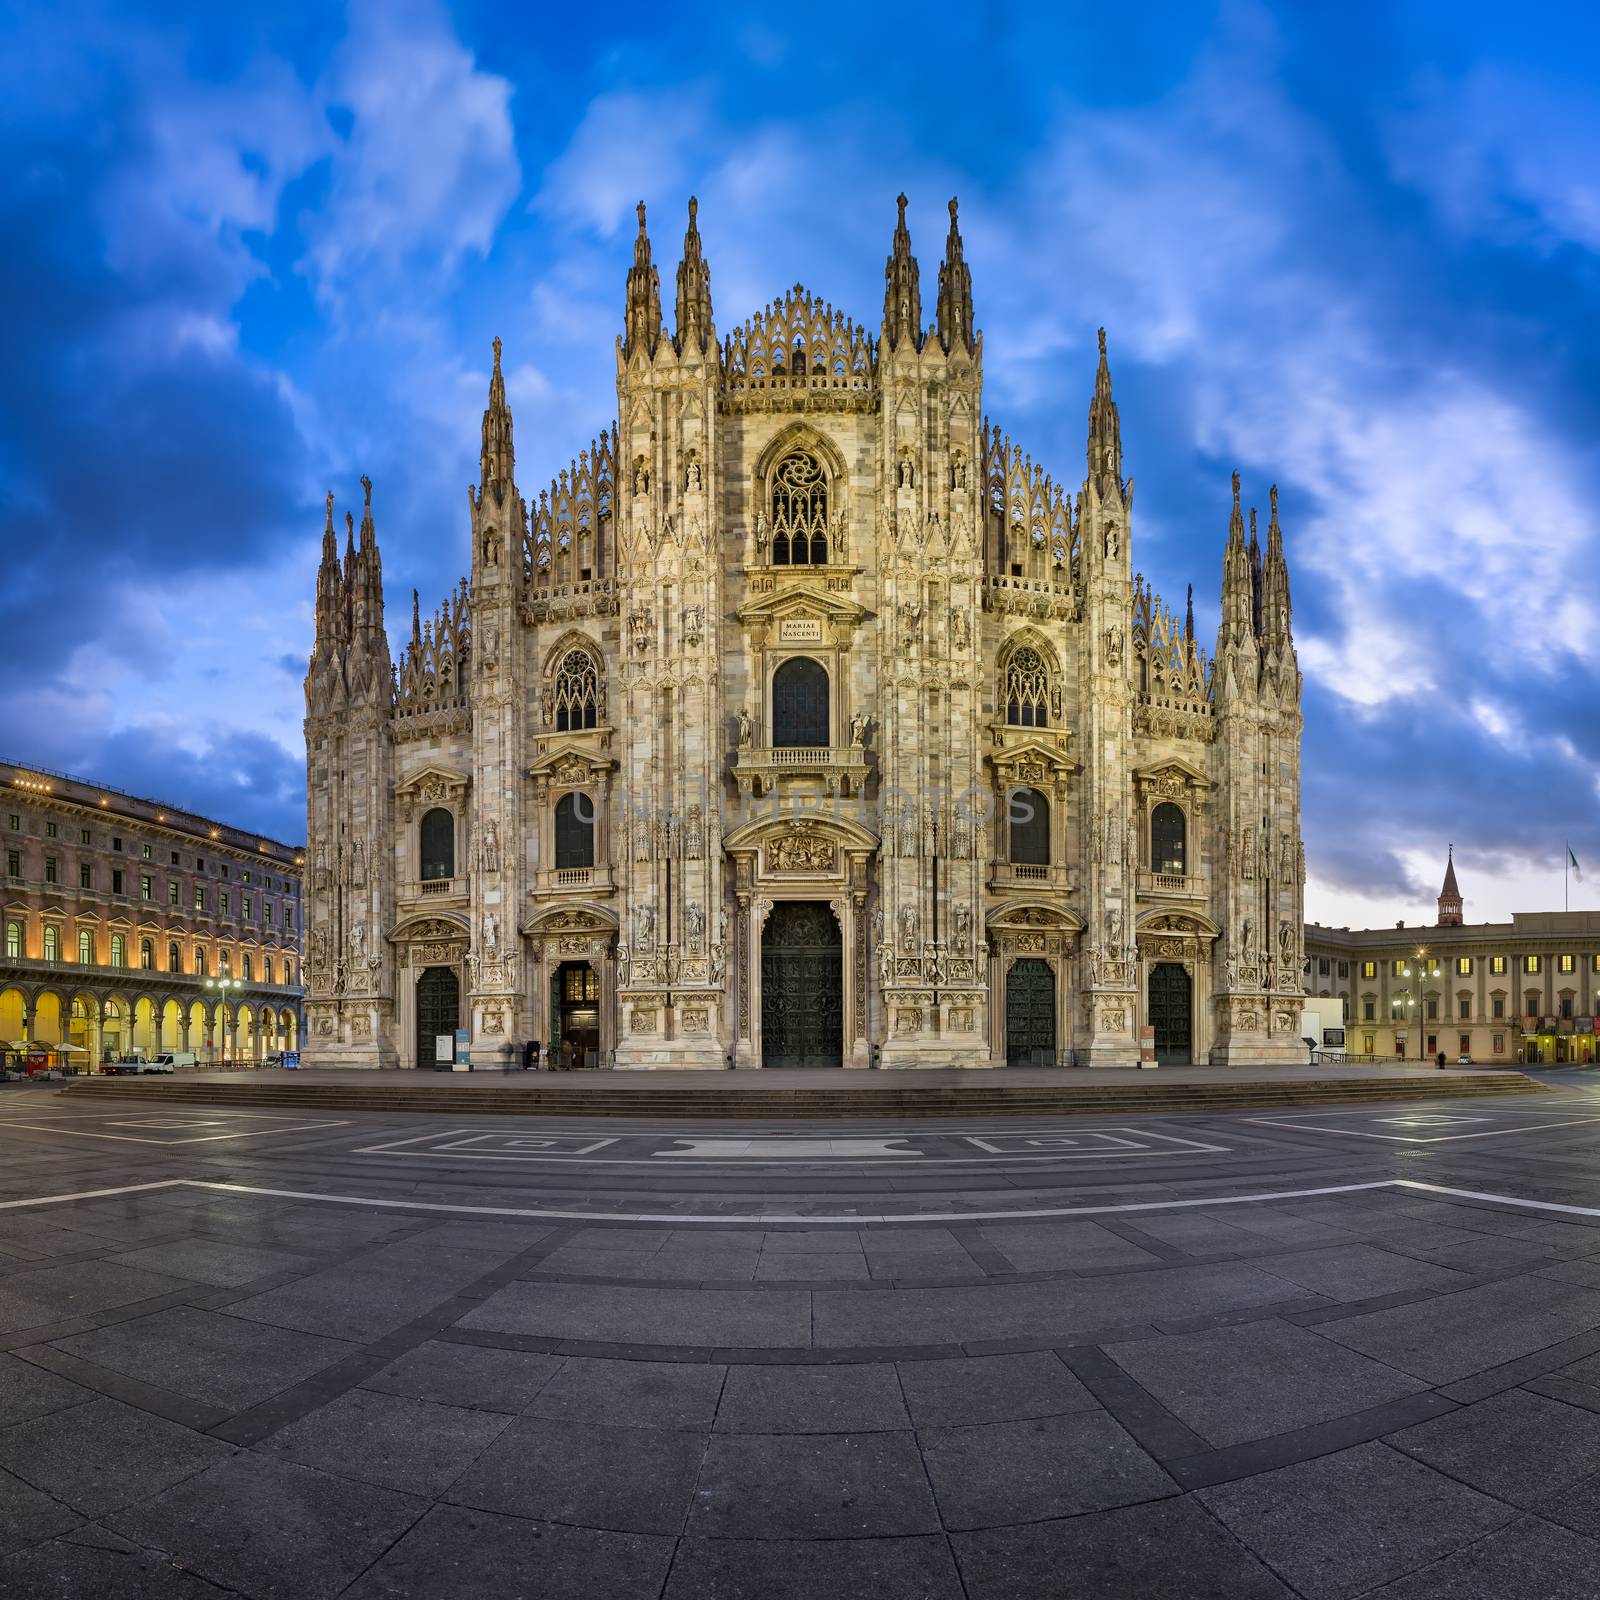 Duomo di Milano (Milan Cathedral) and Piazza del Duomo in the Mo by anshar